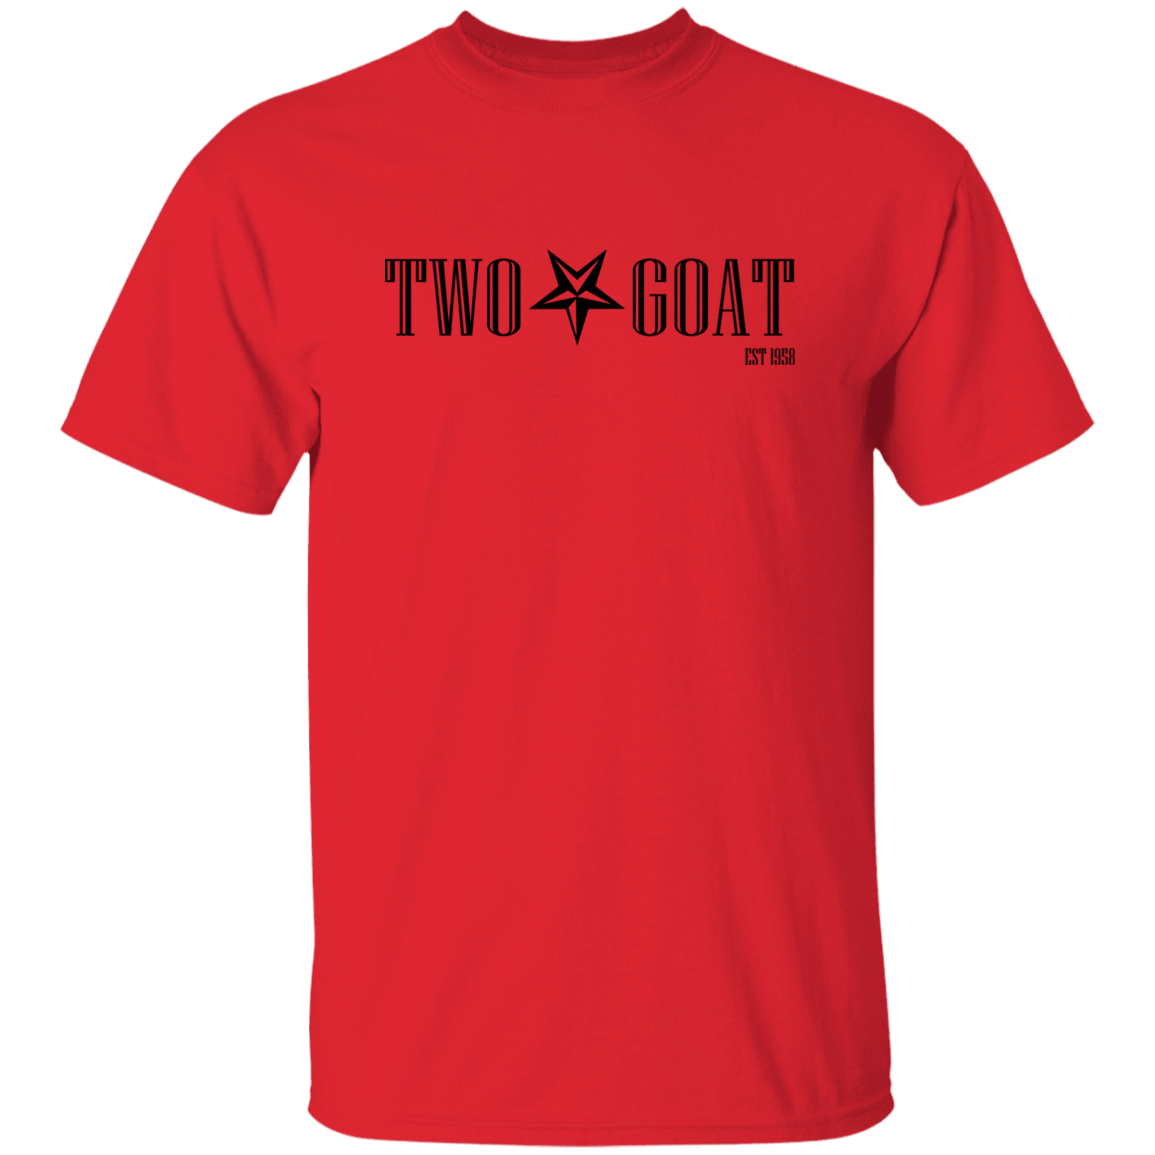 Two Star Goat 5.3 oz. T-Shirt